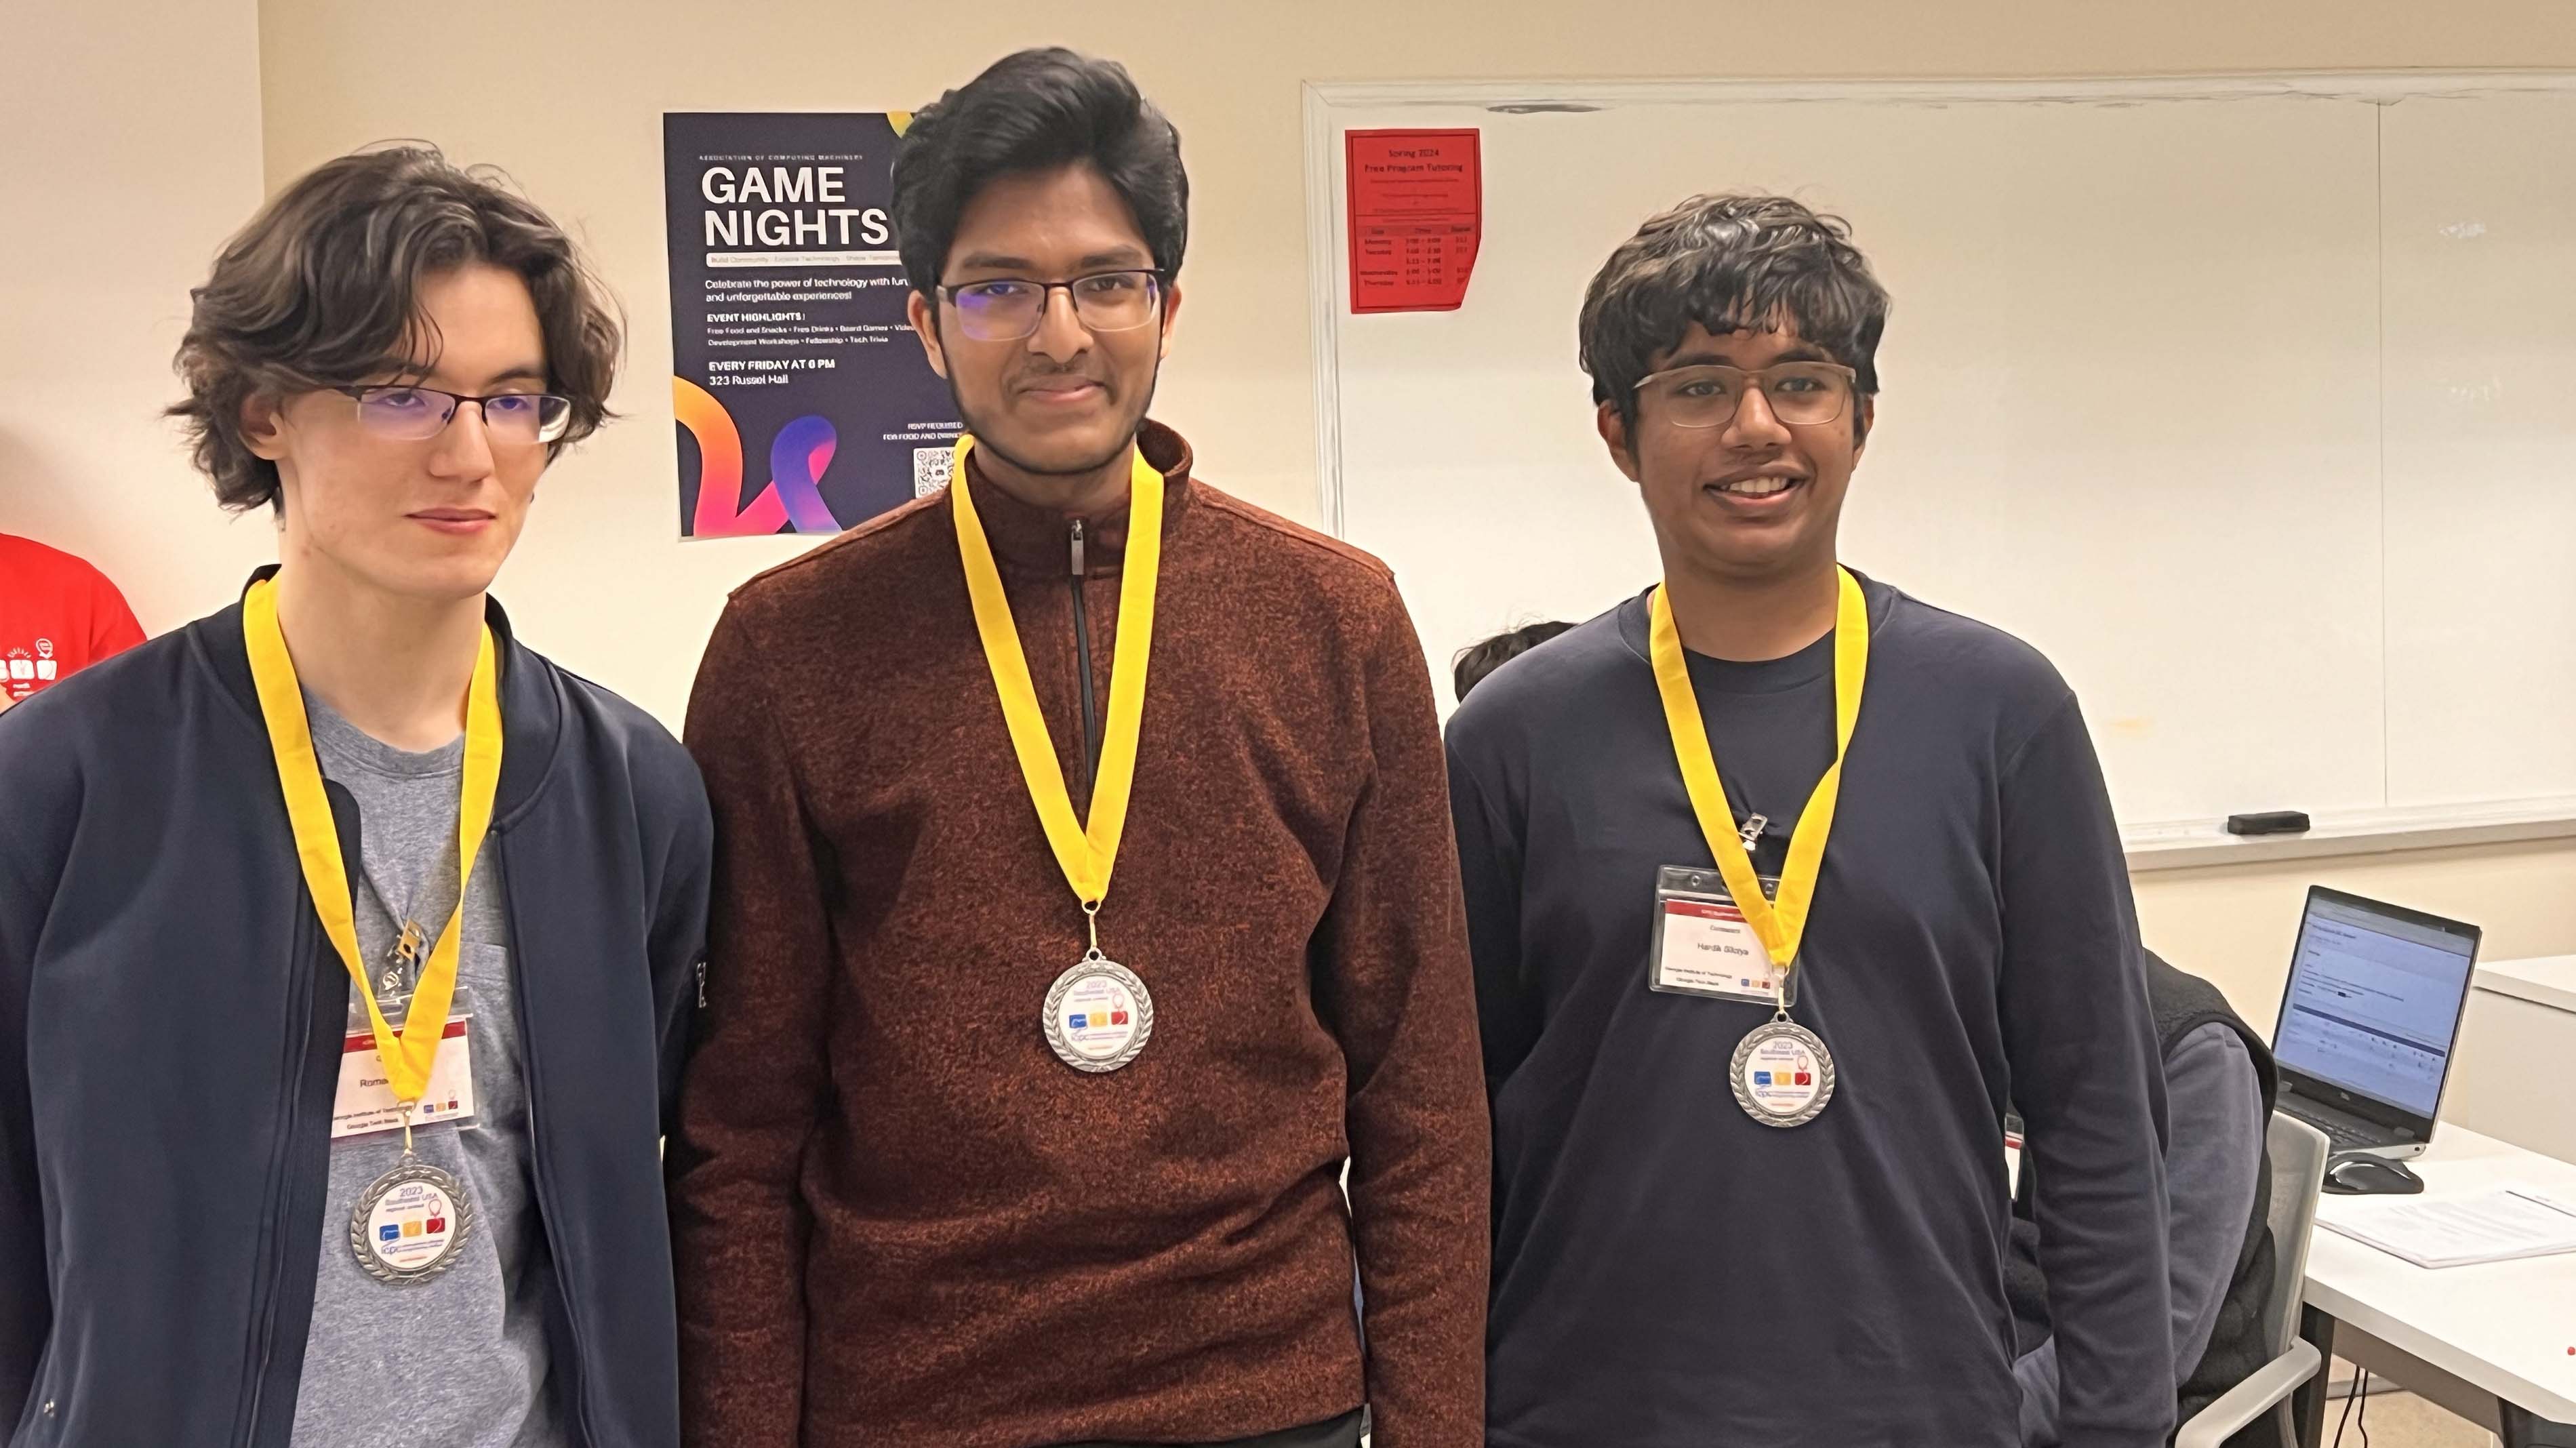 Roman Yakunin, Abhinav Govindaraju, and Hardik Siloiya won second place at the competition. Photos by Edward Chen